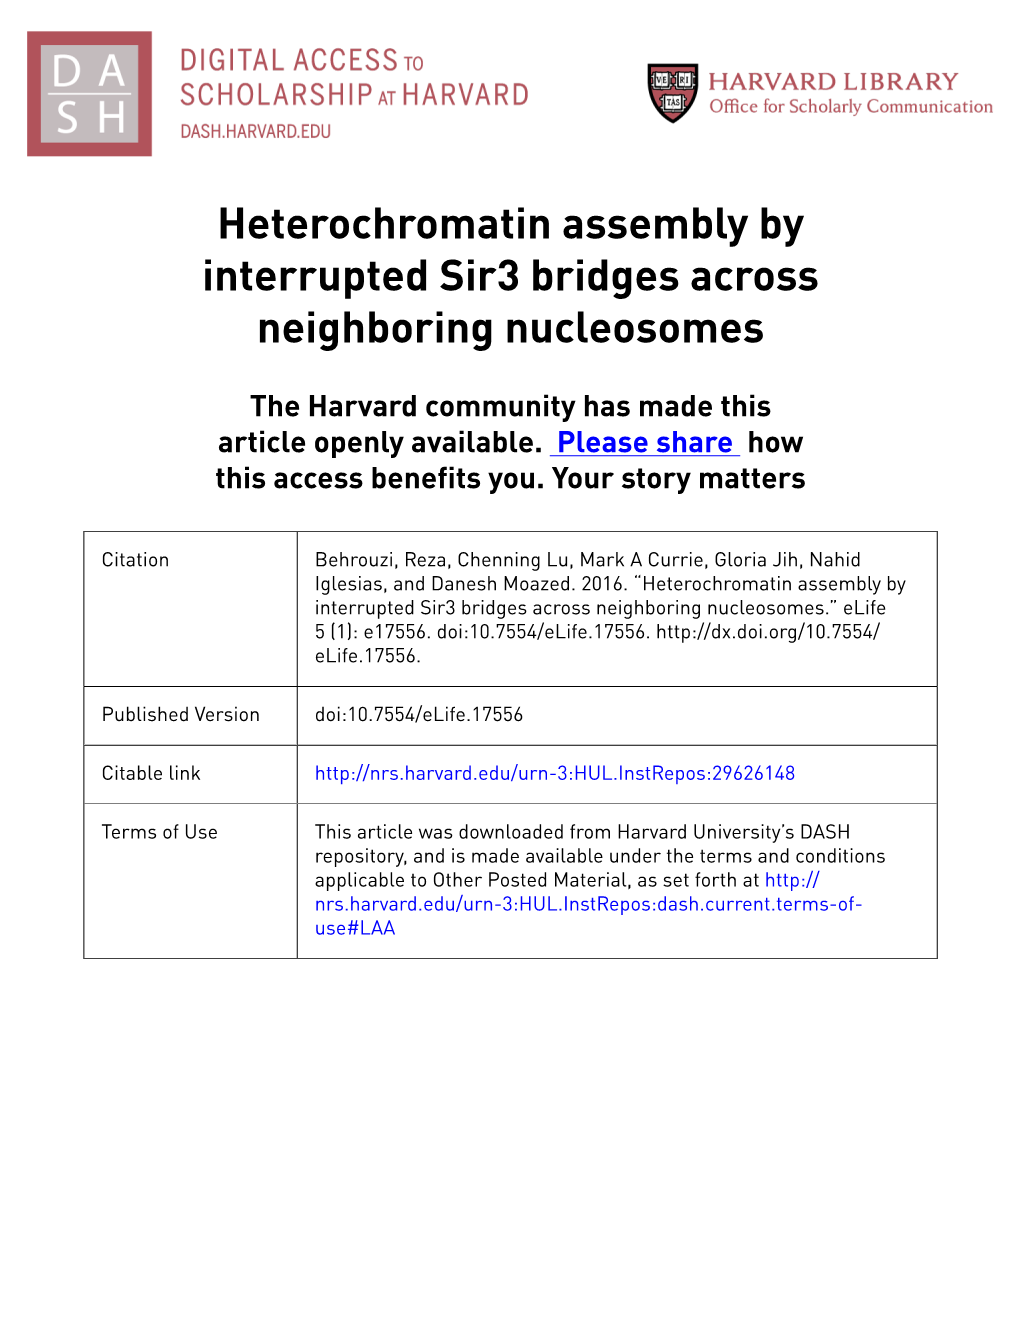 Heterochromatin Assembly by Interrupted Sir3 Bridges Across Neighboring Nucleosomes